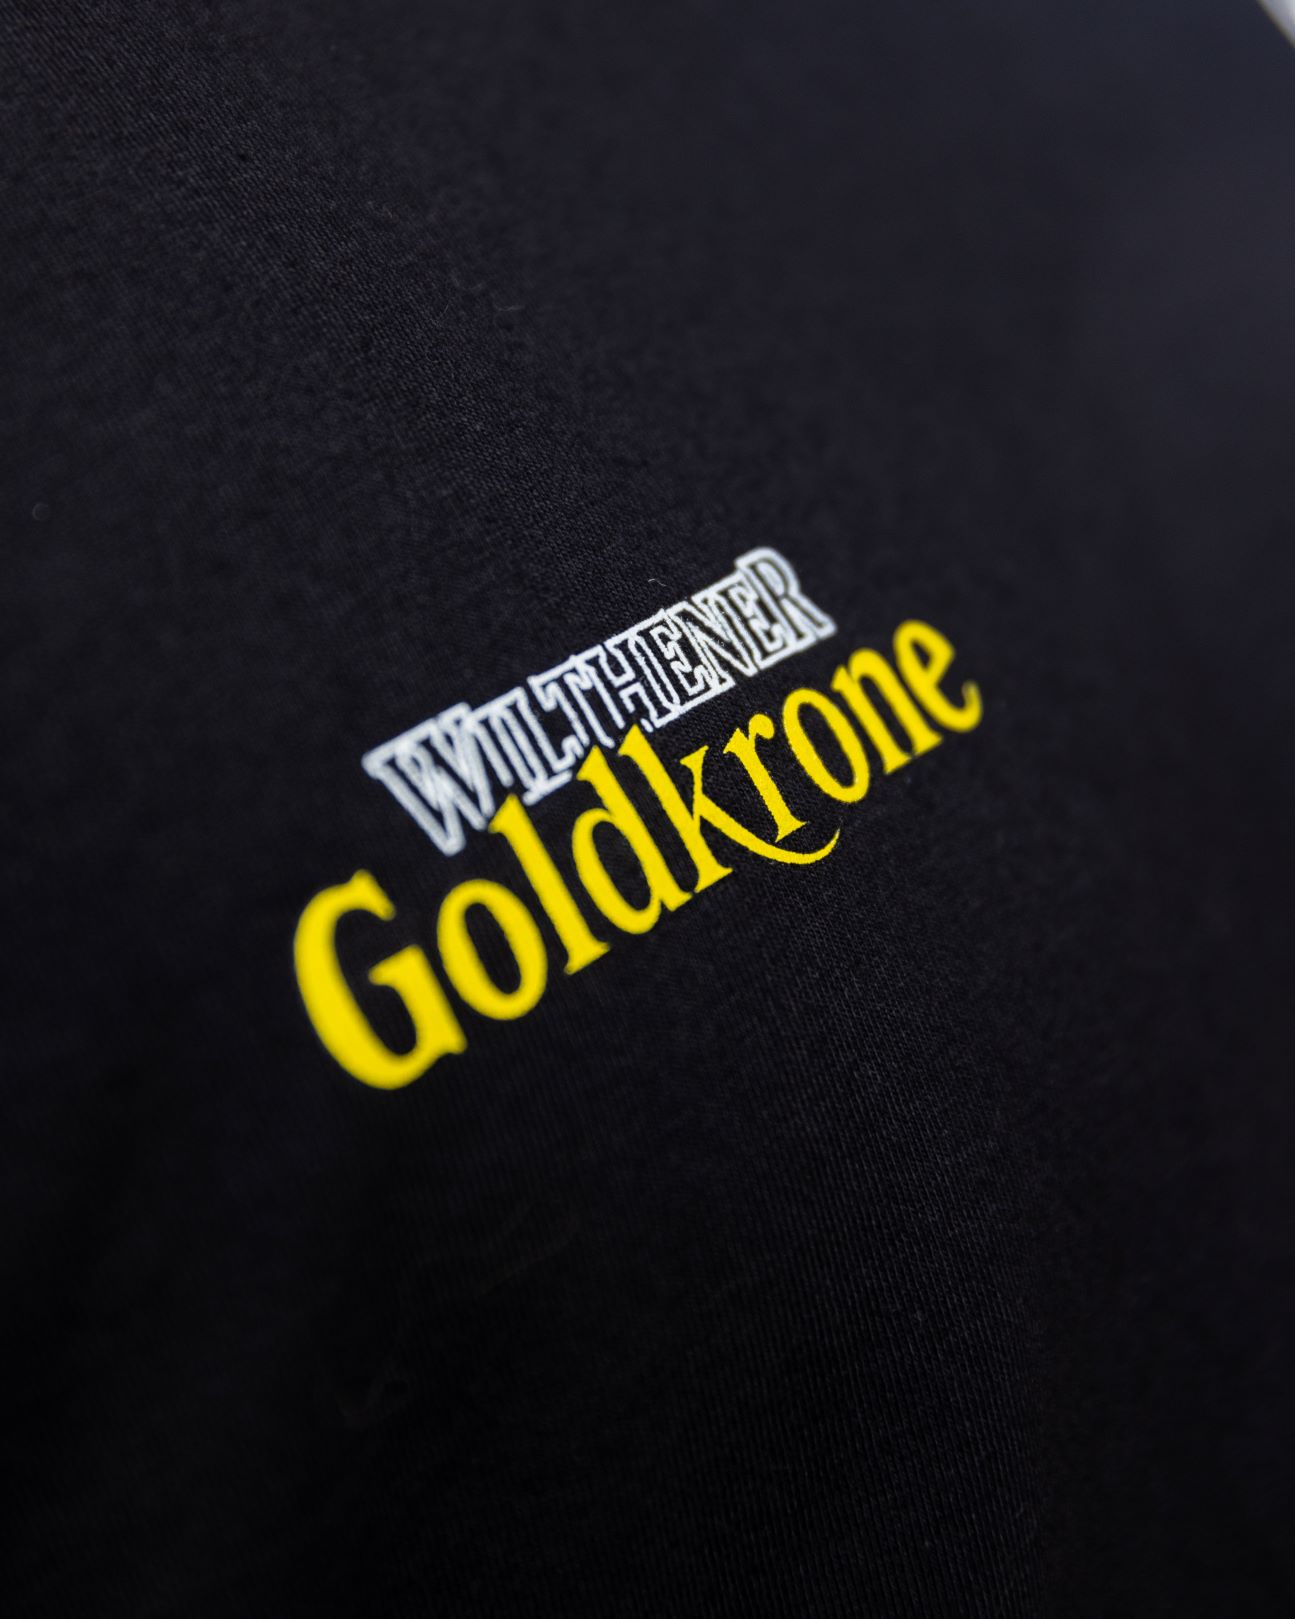 Wilthener Goldkrone x 102Boyz T-Shirt schwarz